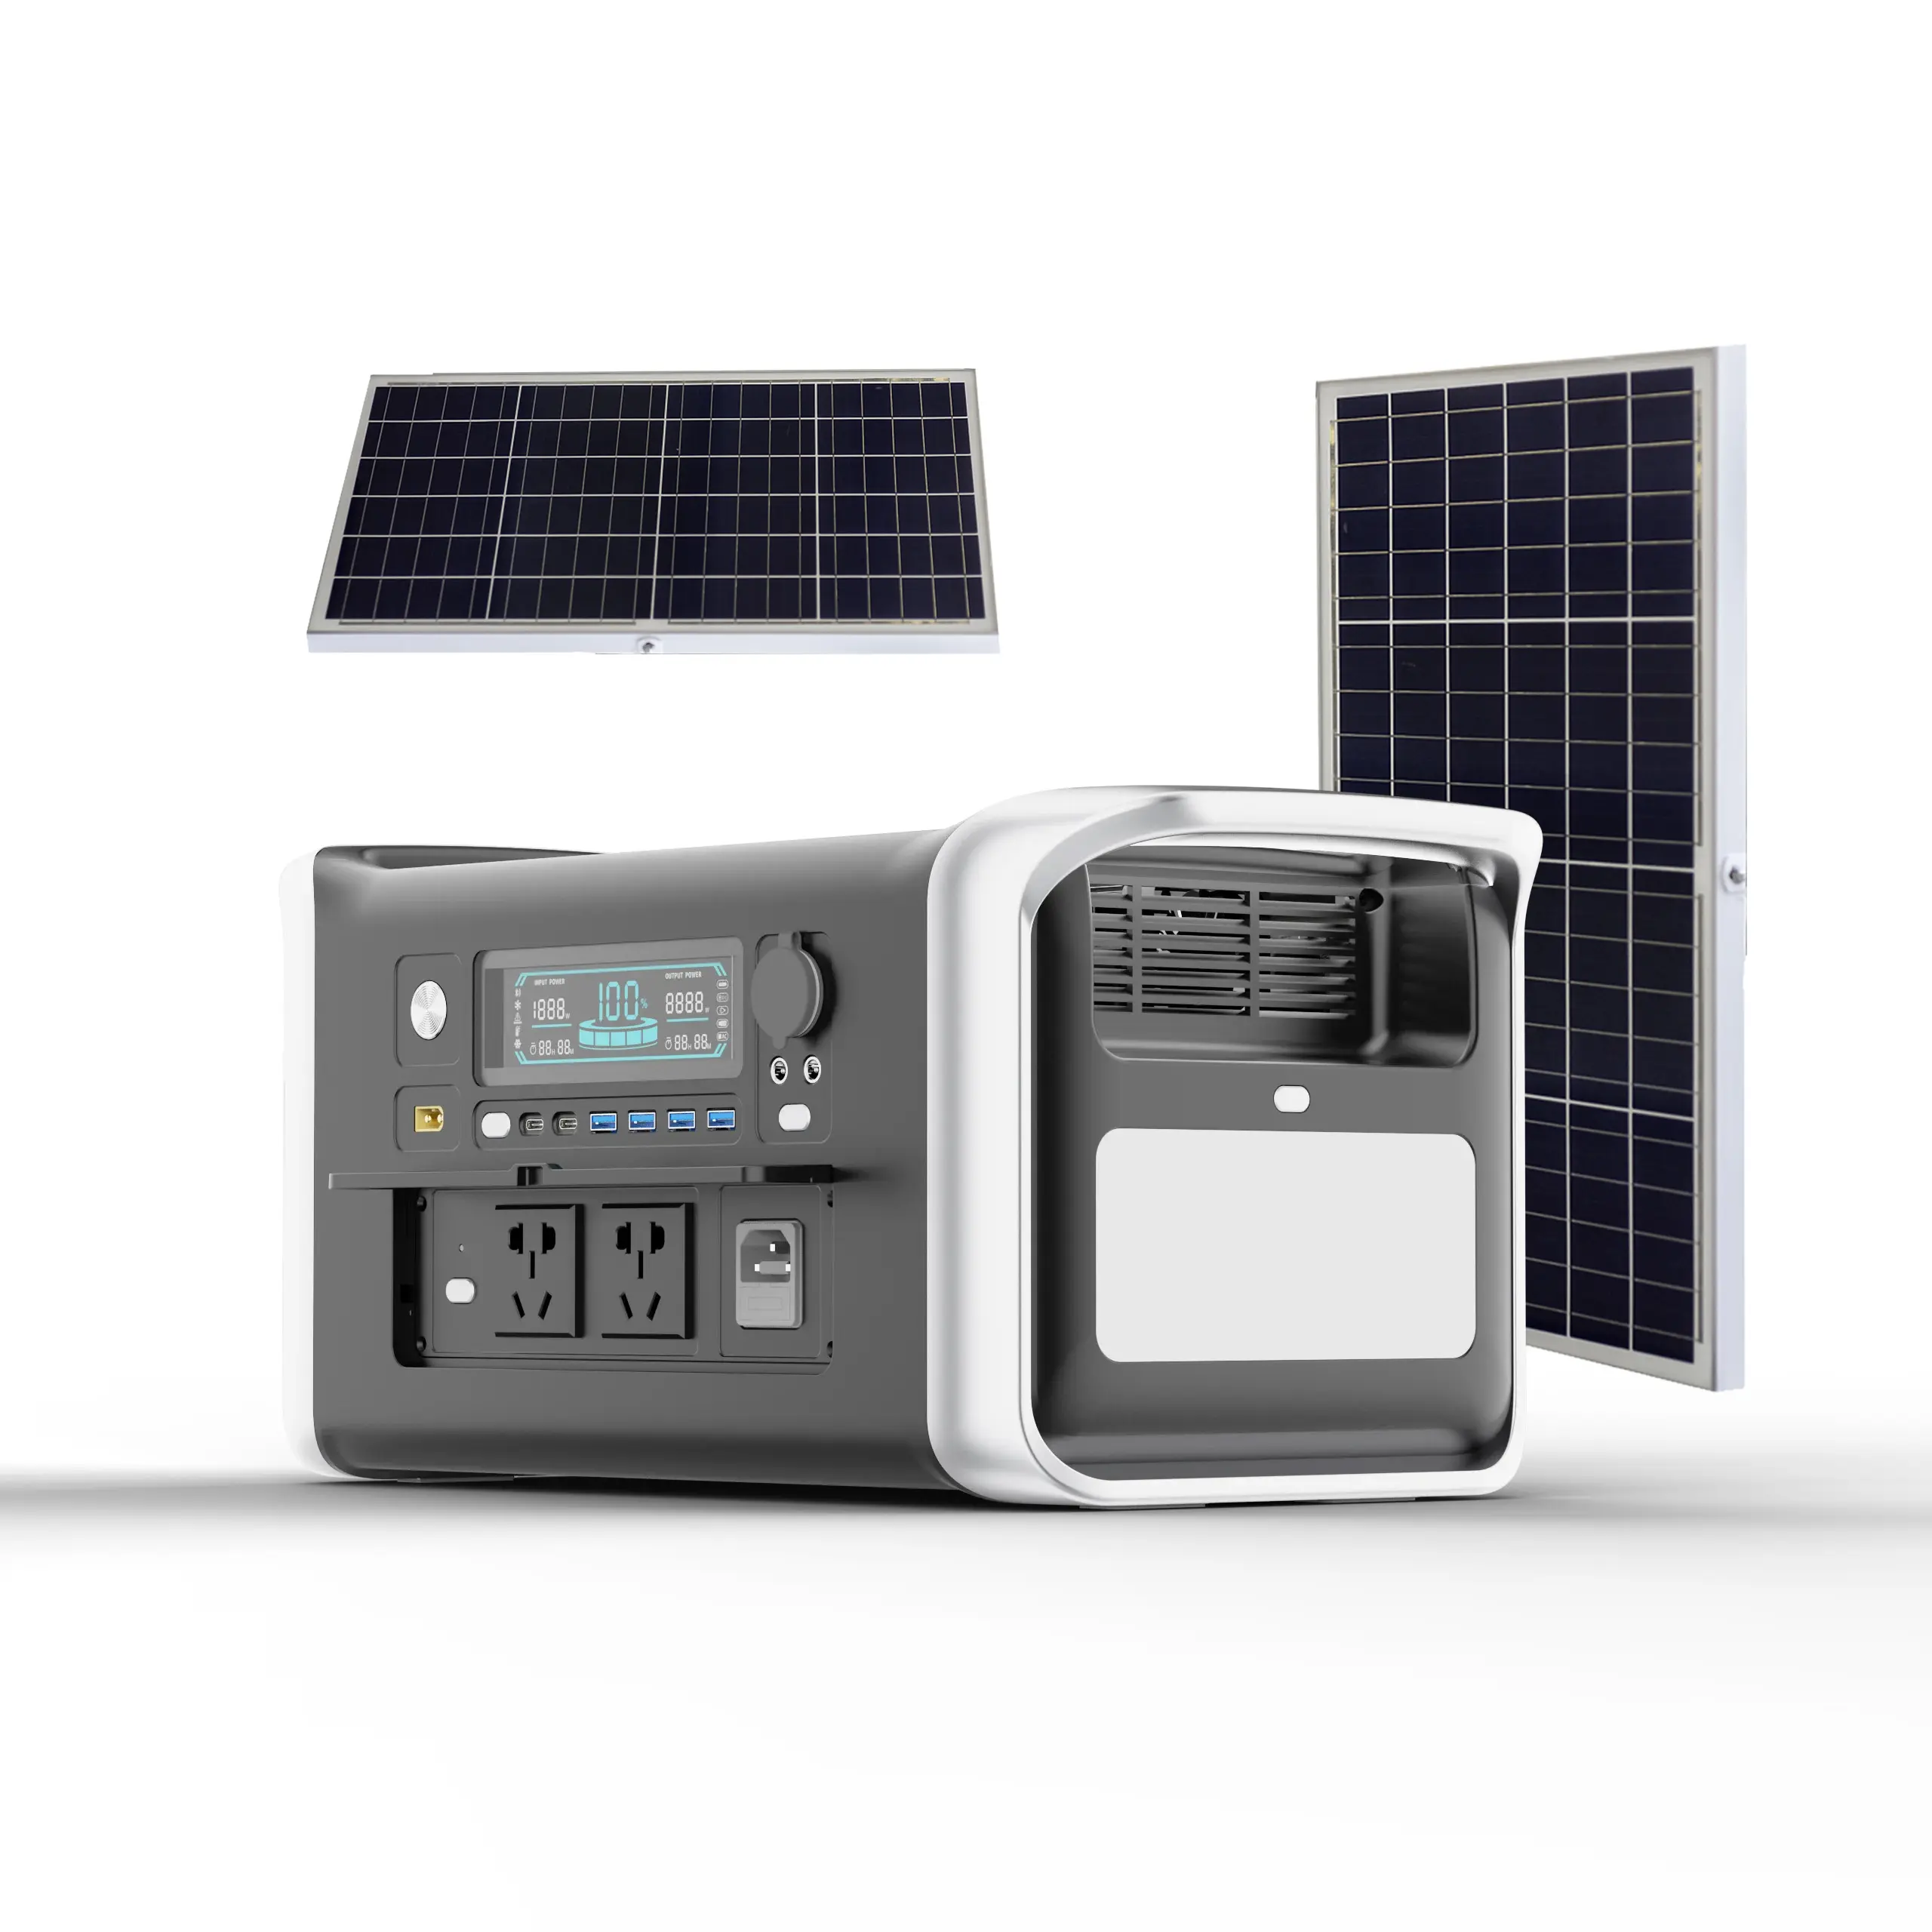 Hot Sale Tragbare mobile Strom versorgung Solar kraftwerk Strom versorgungs system 1800W Solar batterie